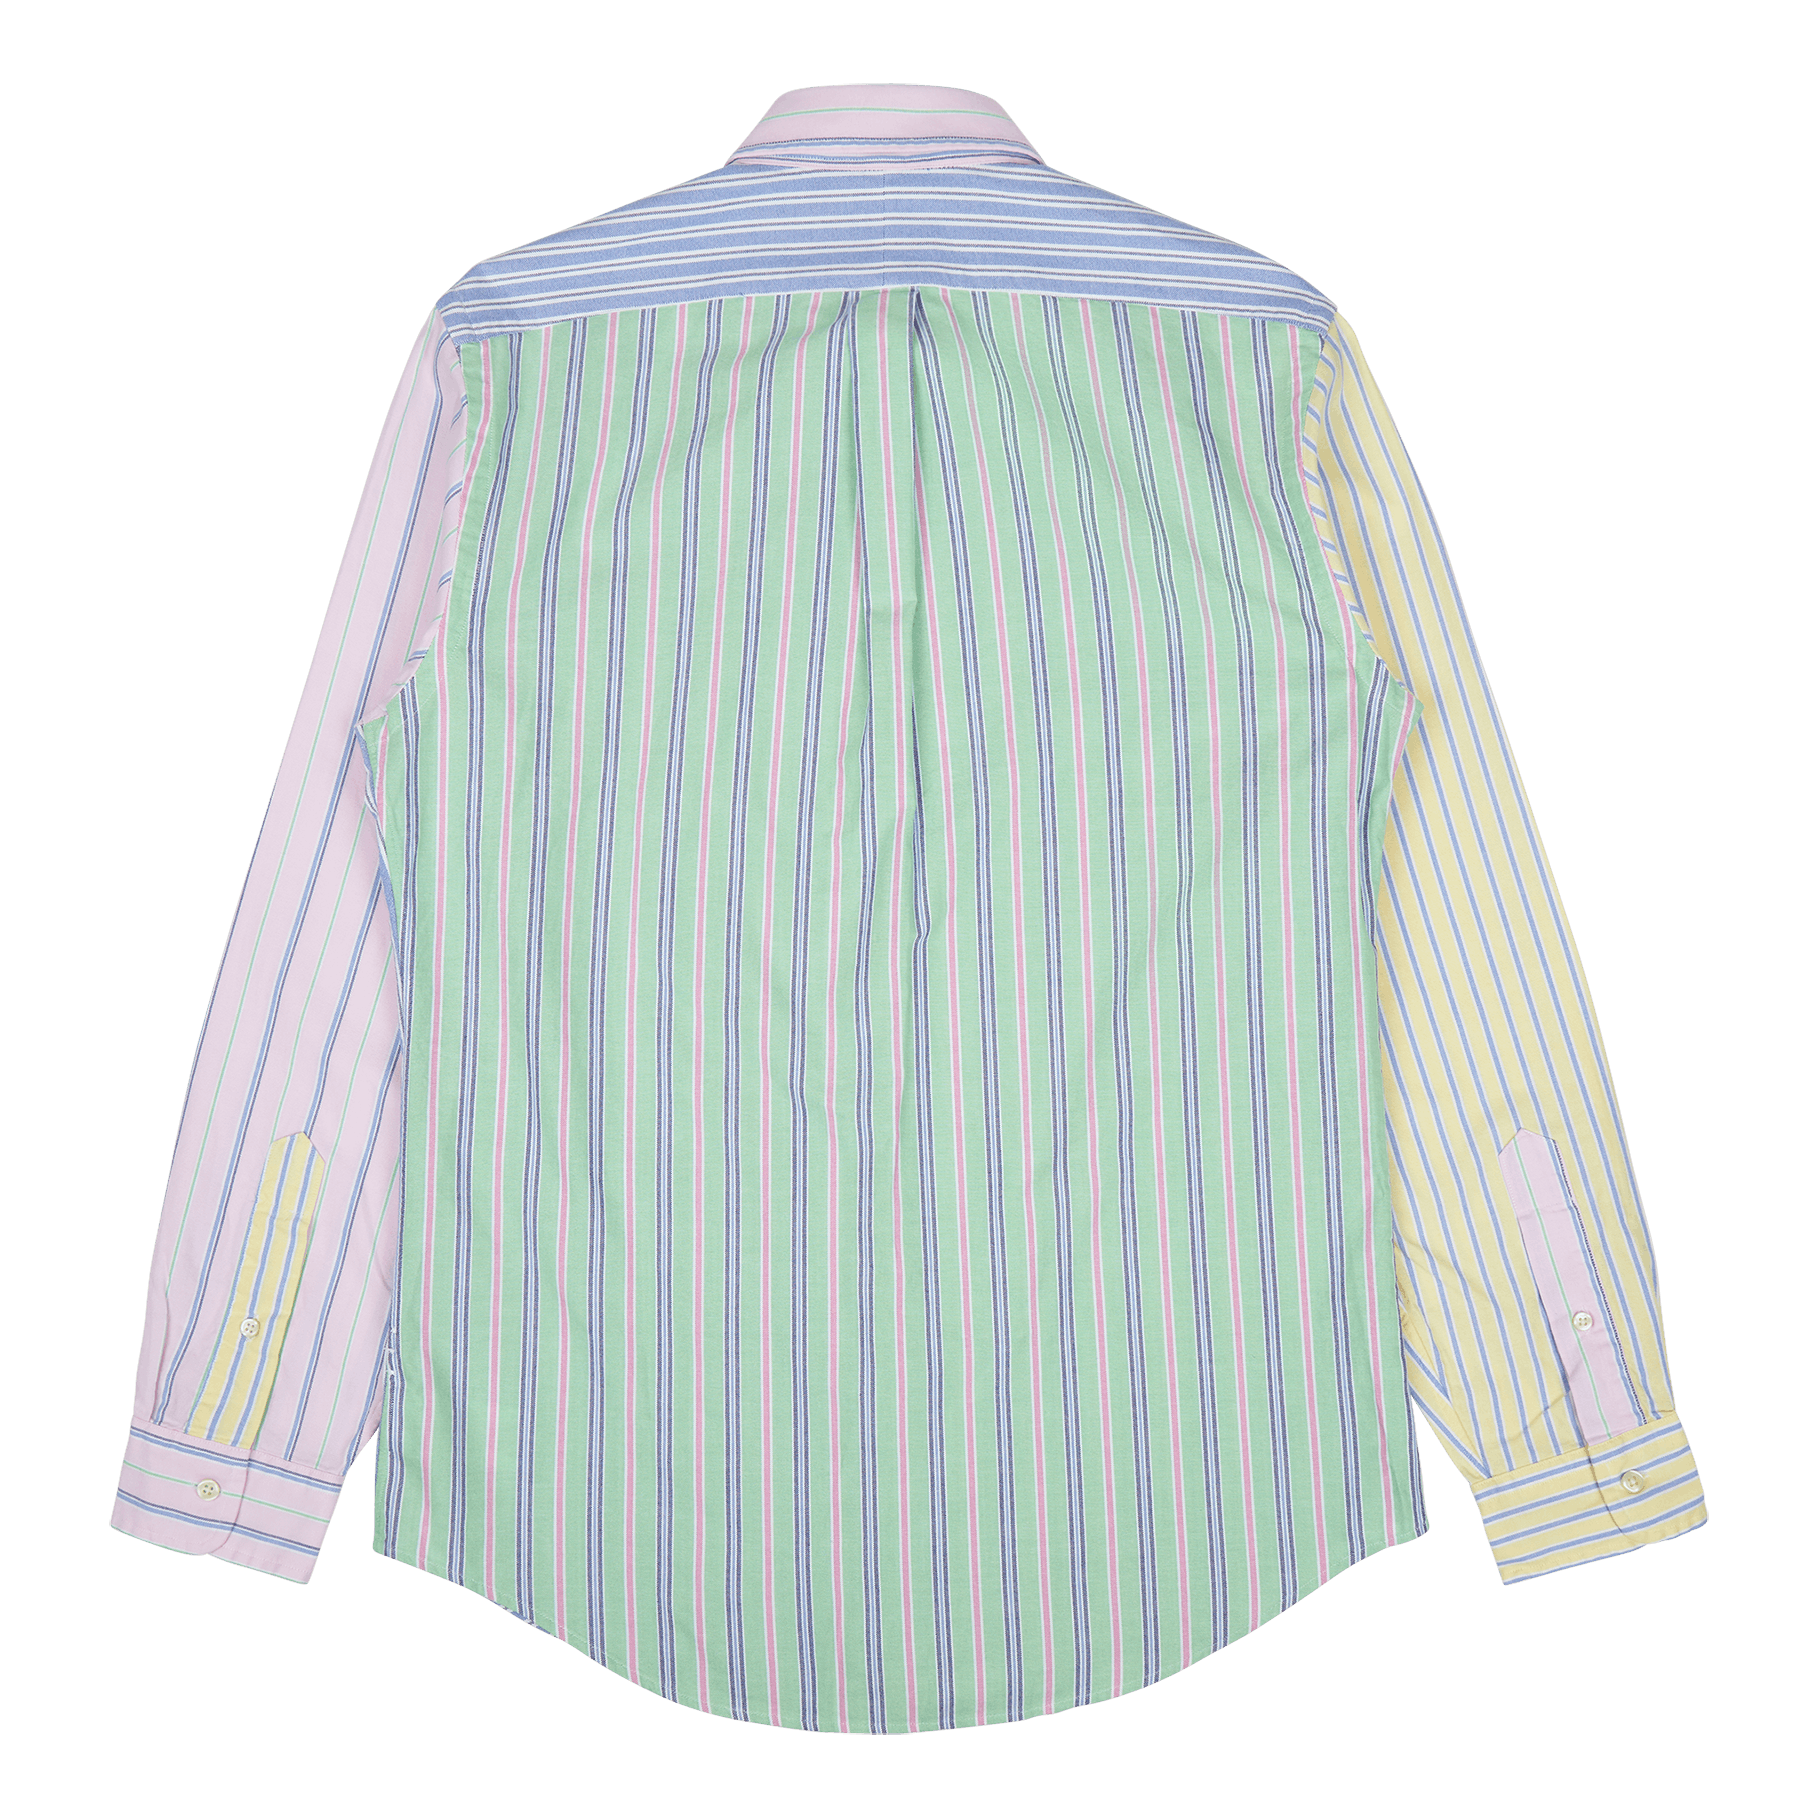 40/1 Lw Yd Oxford-cubdpppkts 5968 Fancy Stripe Funshirt